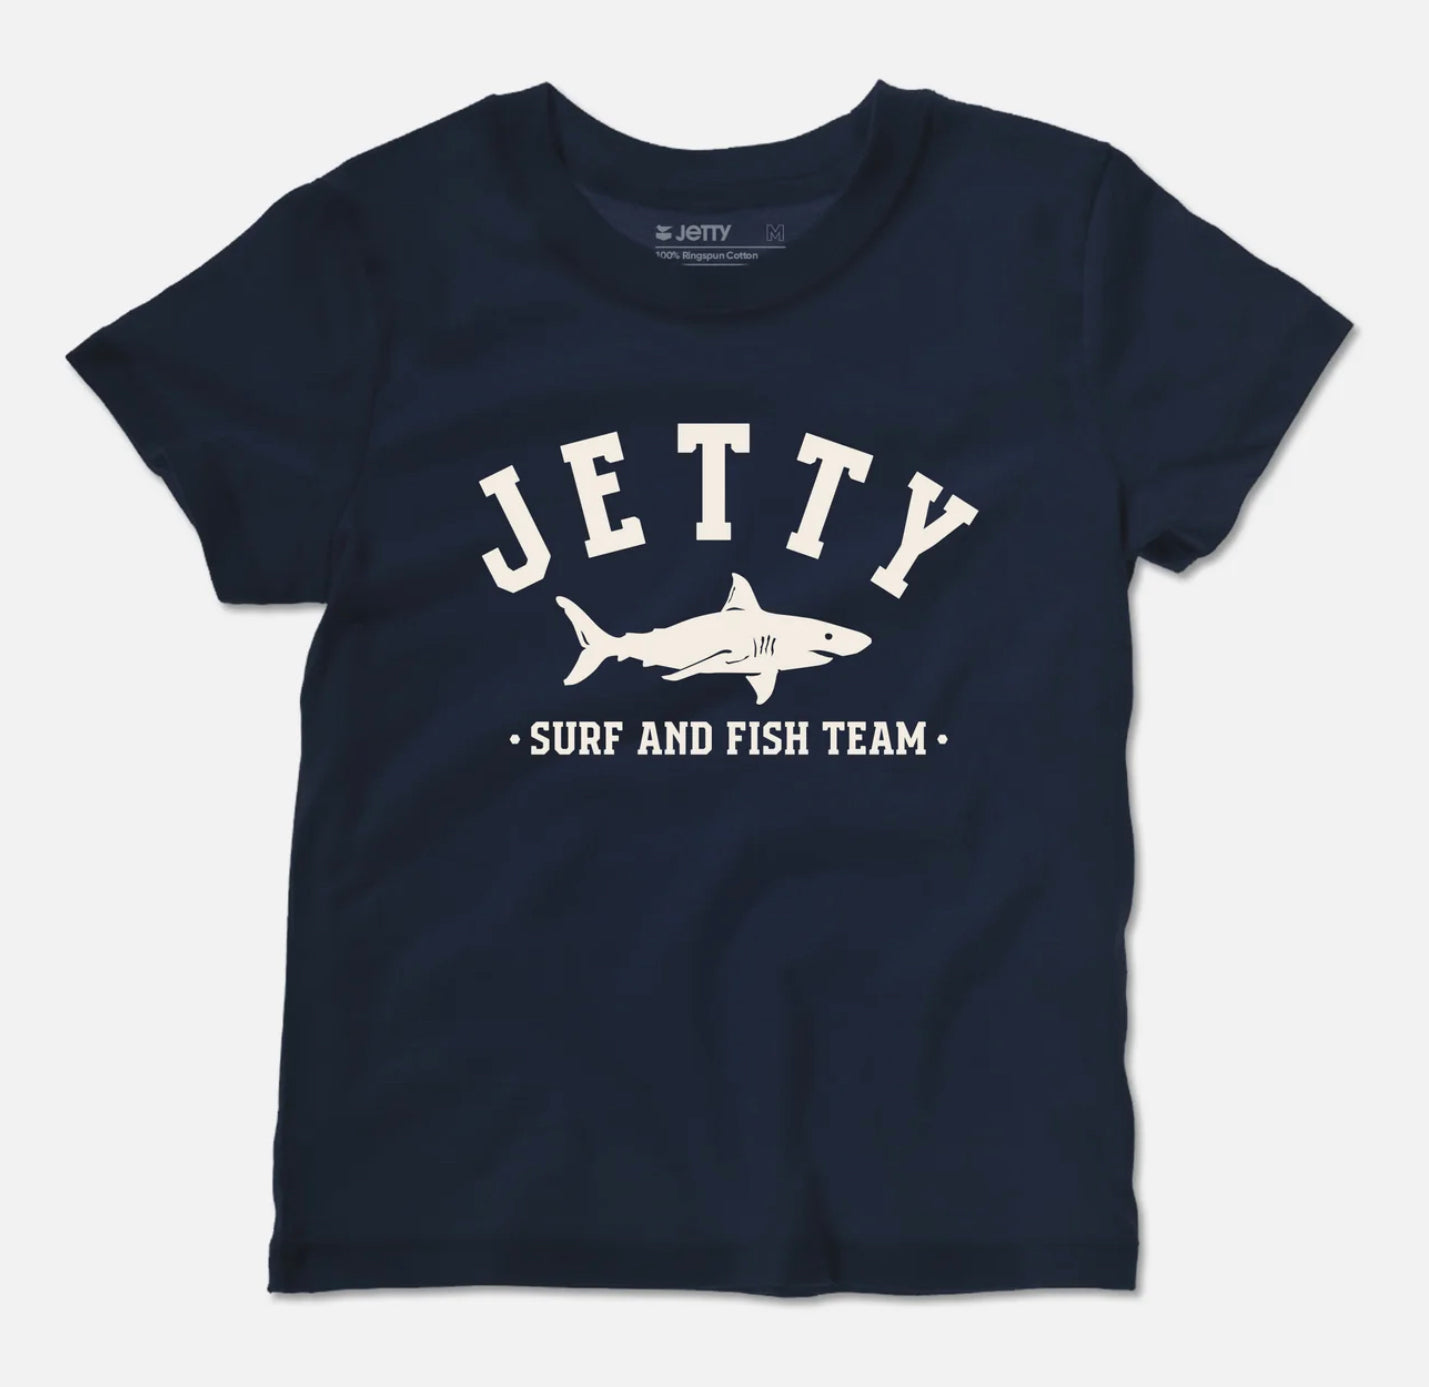 Jetty - Team Toddler Tee